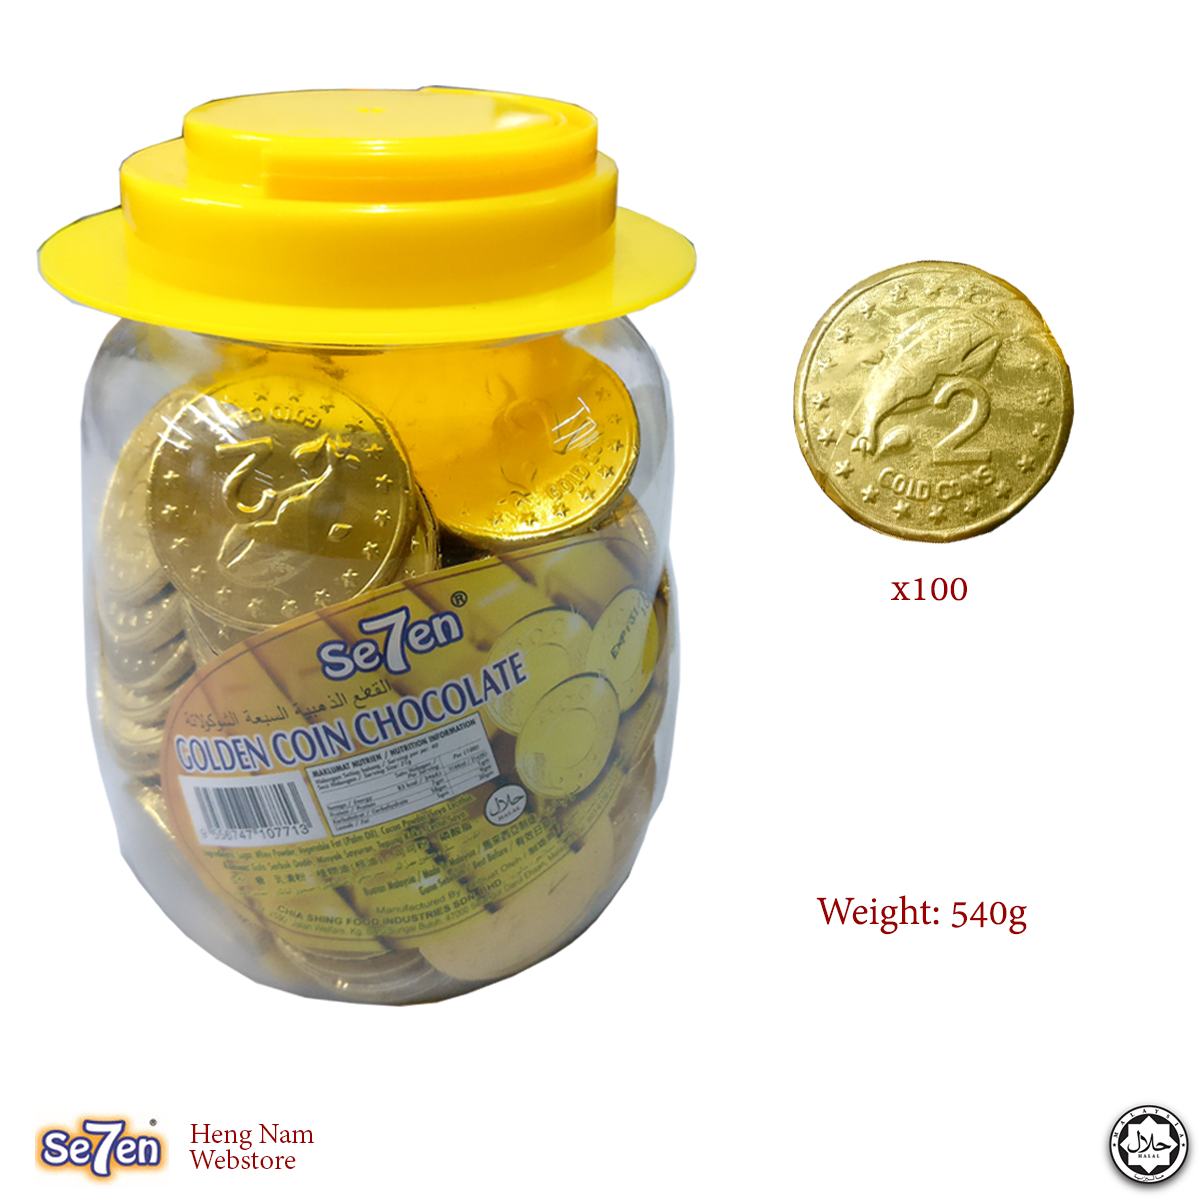 . Hdpng.com Se7En Chocolate (Gold Coin Shaped)   1 Jar (100 Pieces) Hdpng.com  - Jar Of Sweets, Transparent background PNG HD thumbnail